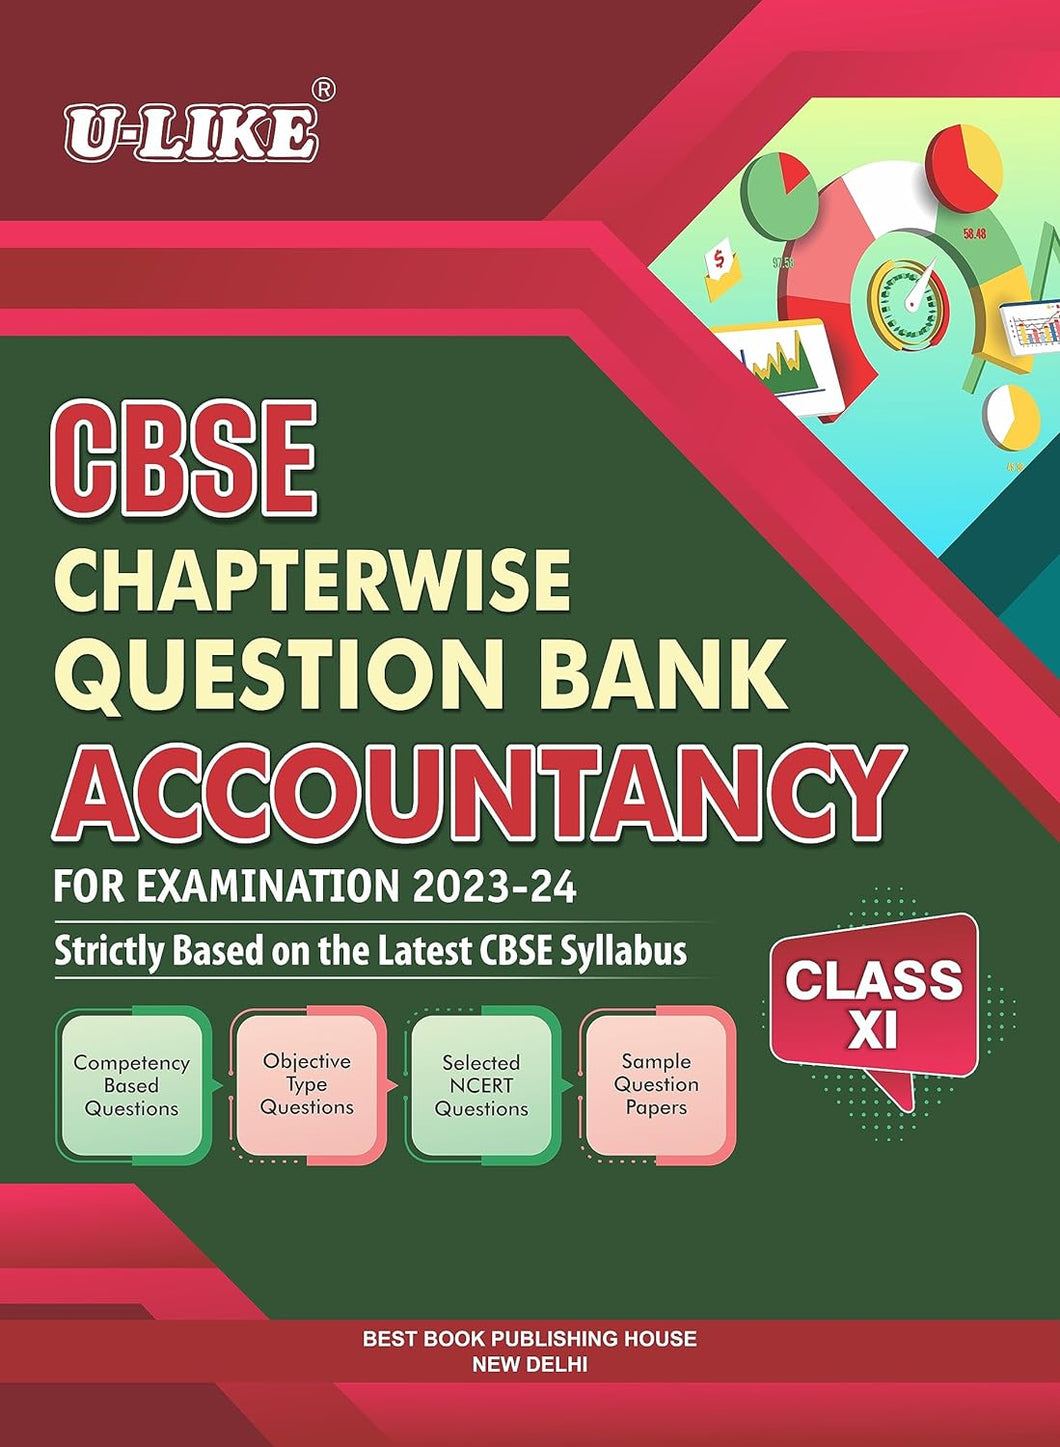 U-LIKE Class 11 Accountancy CBSE Chapterwise Question Bank 2023-24